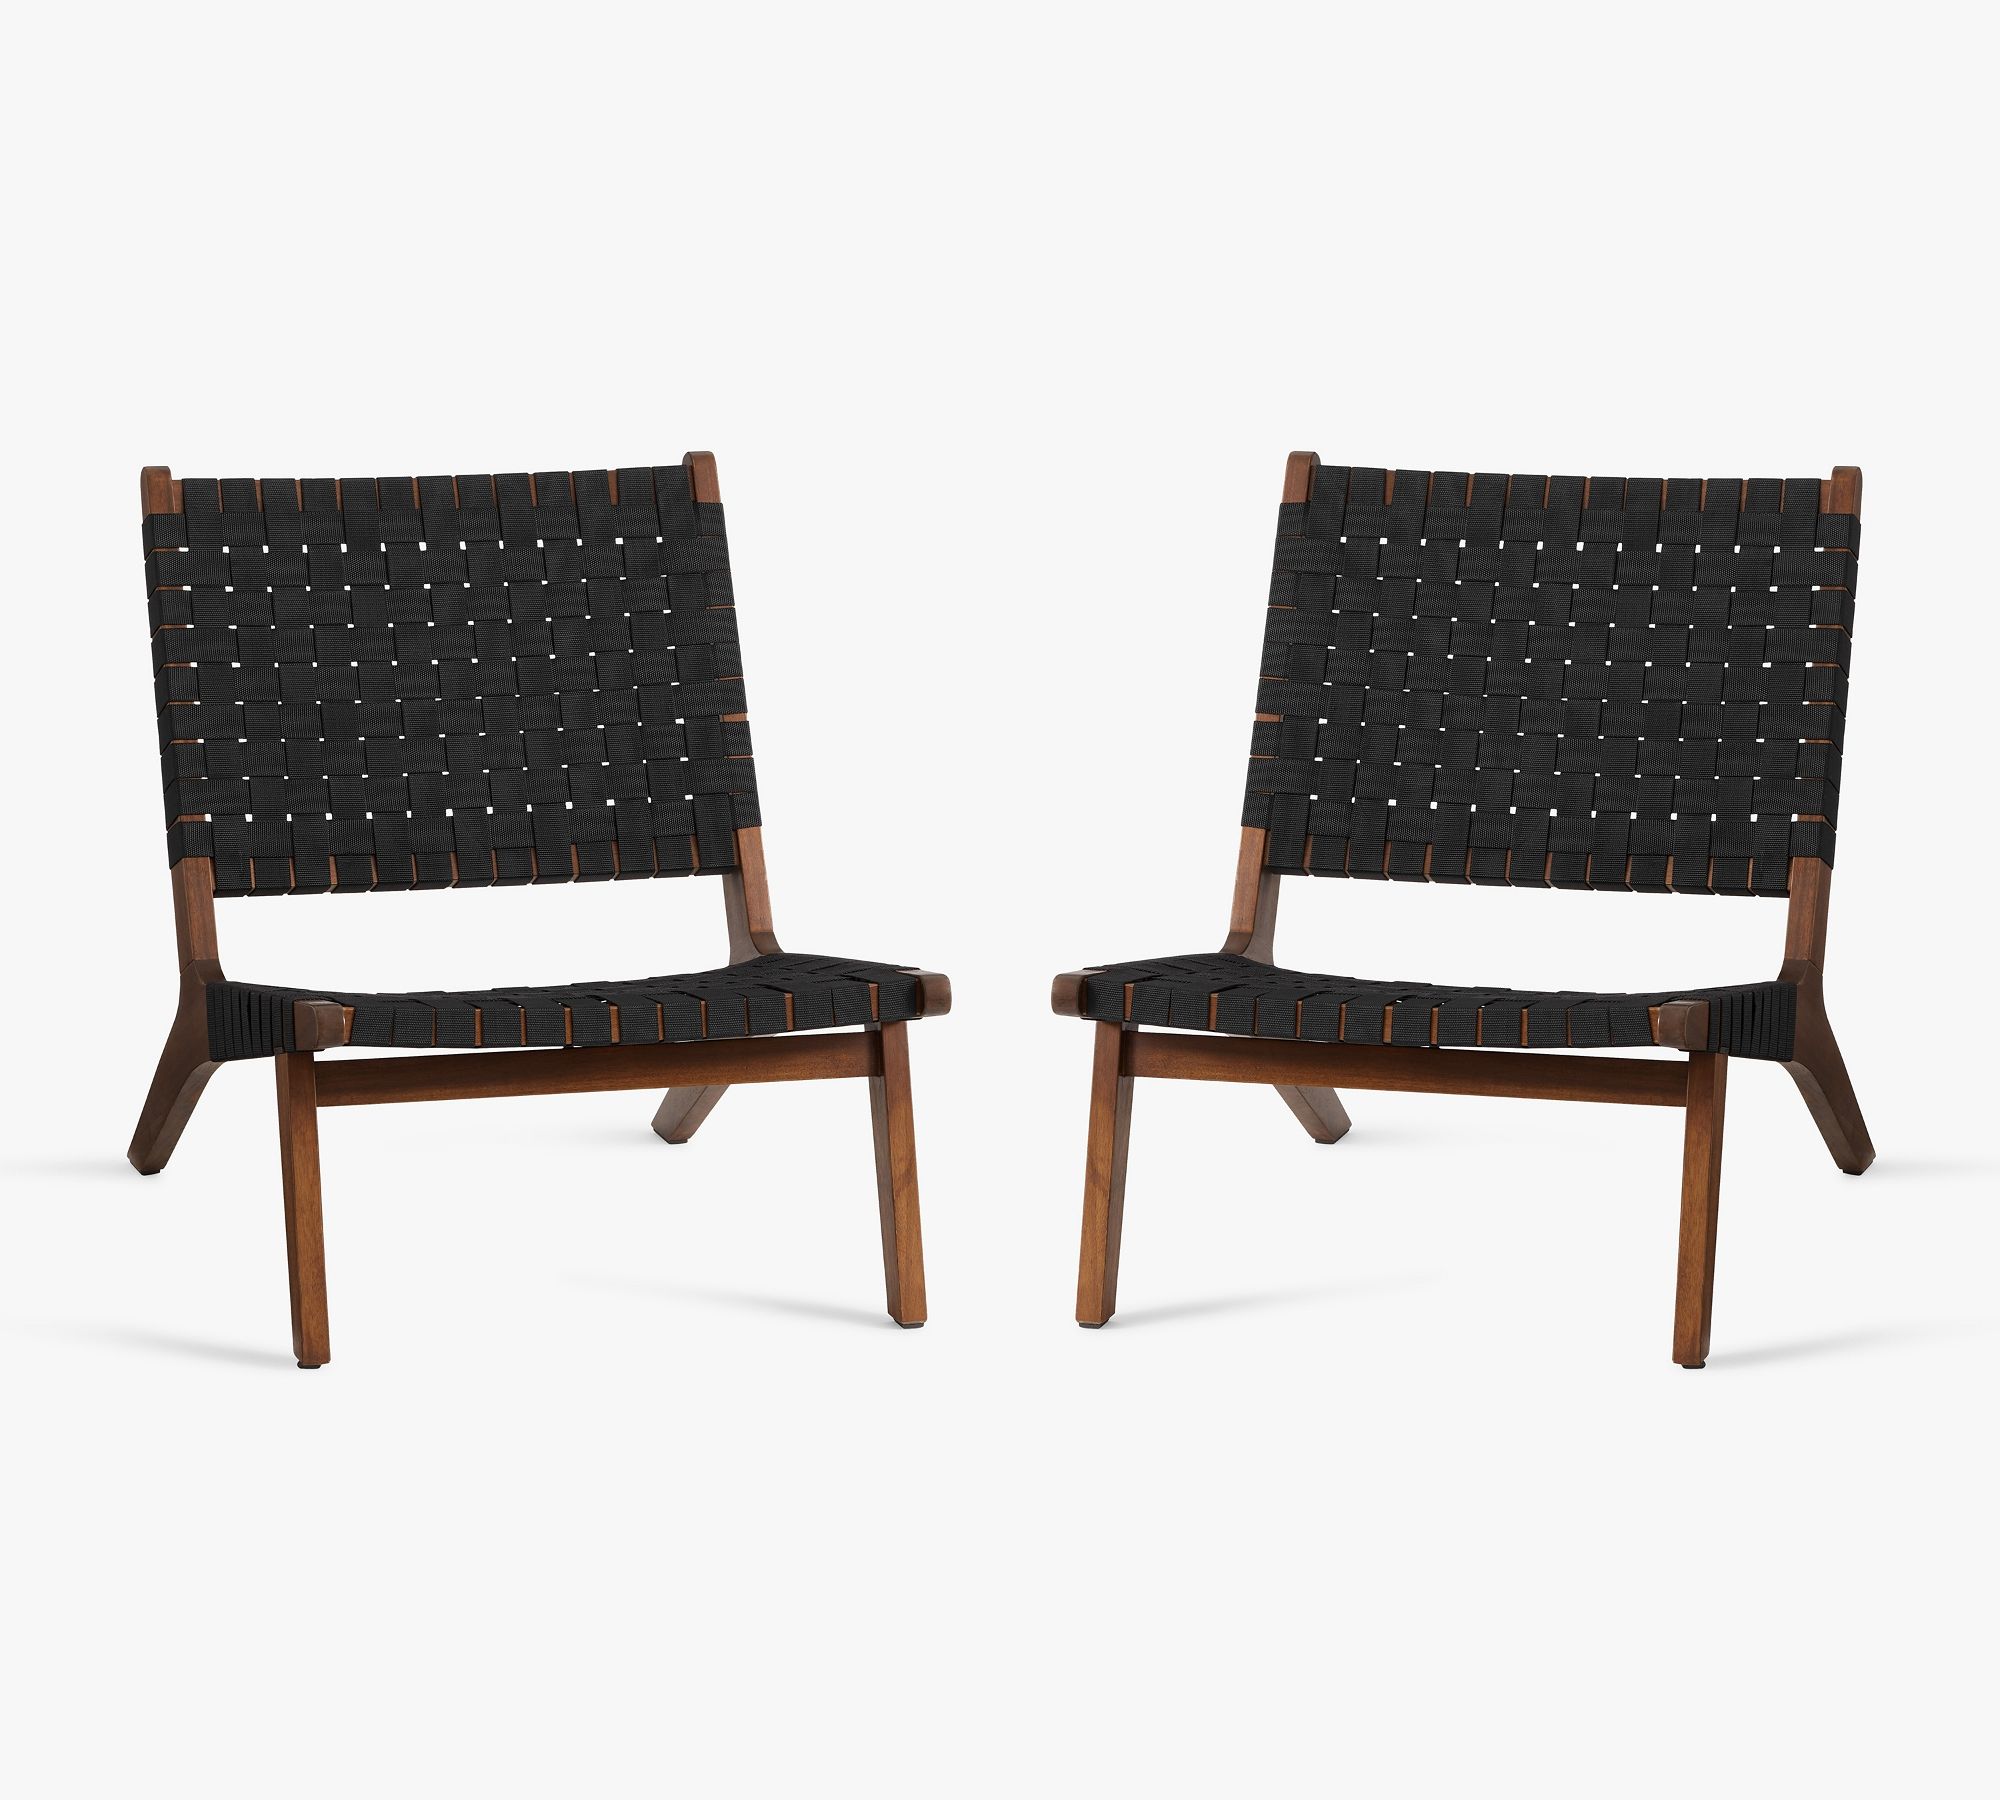 Abbott Acacia Woven Outdoor Lounge Chair